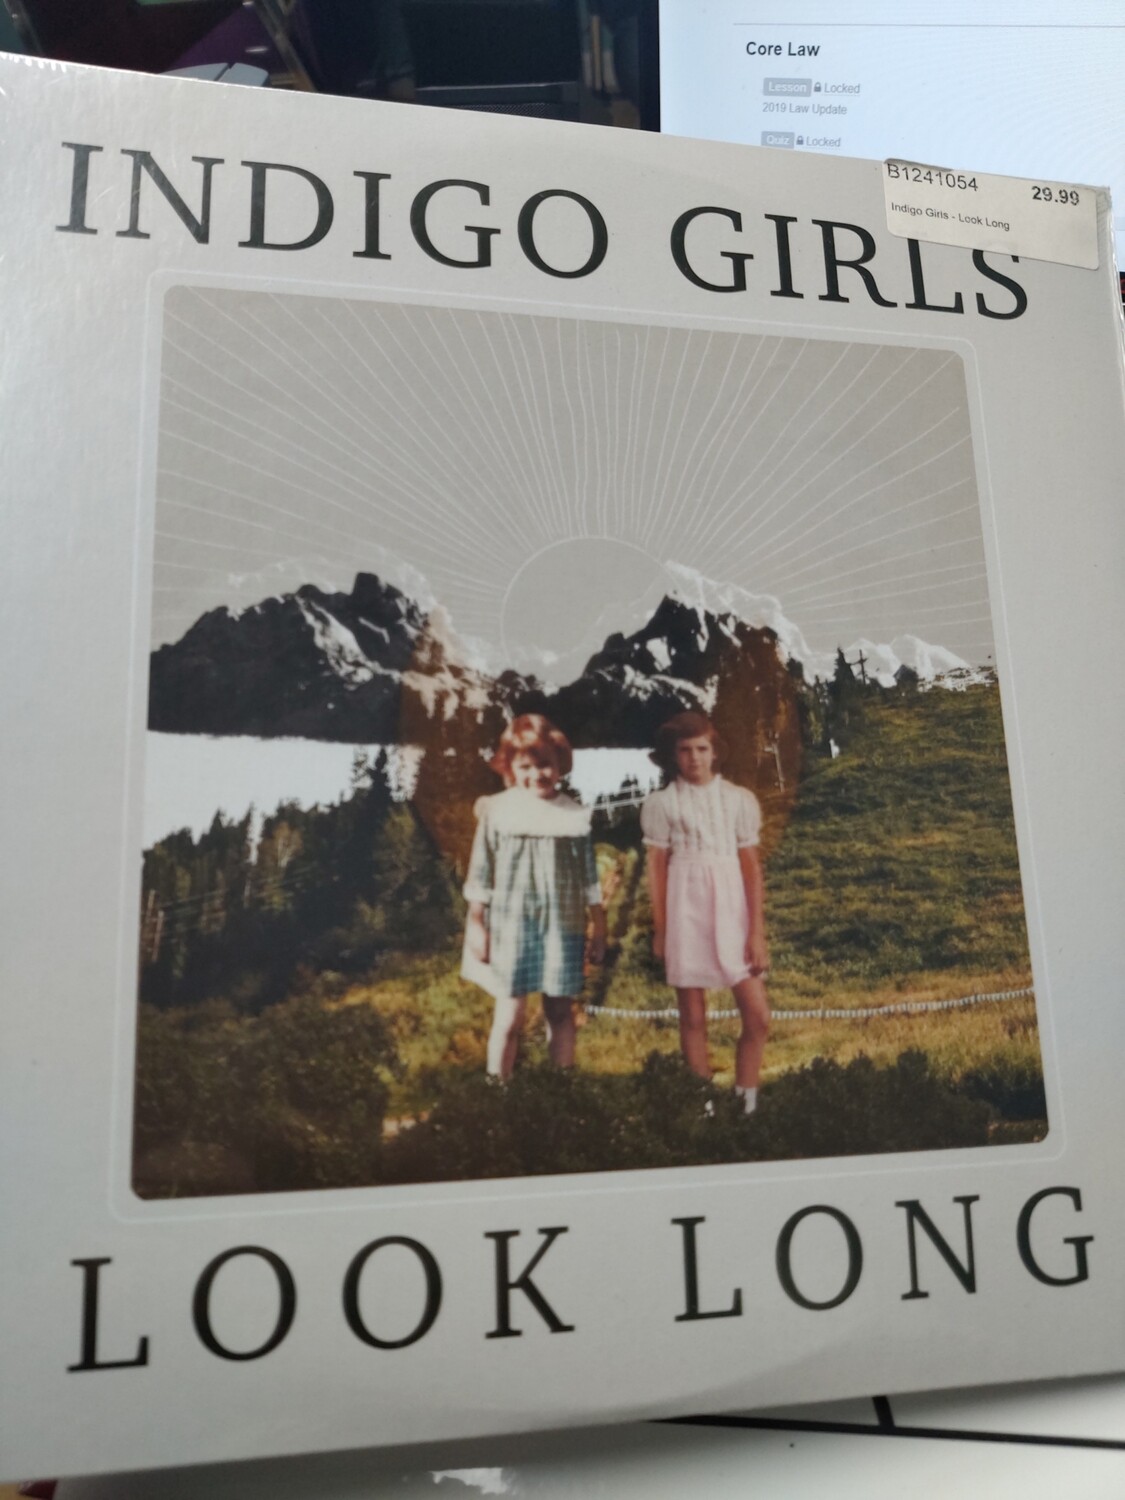 Indigo Girls - Look Long